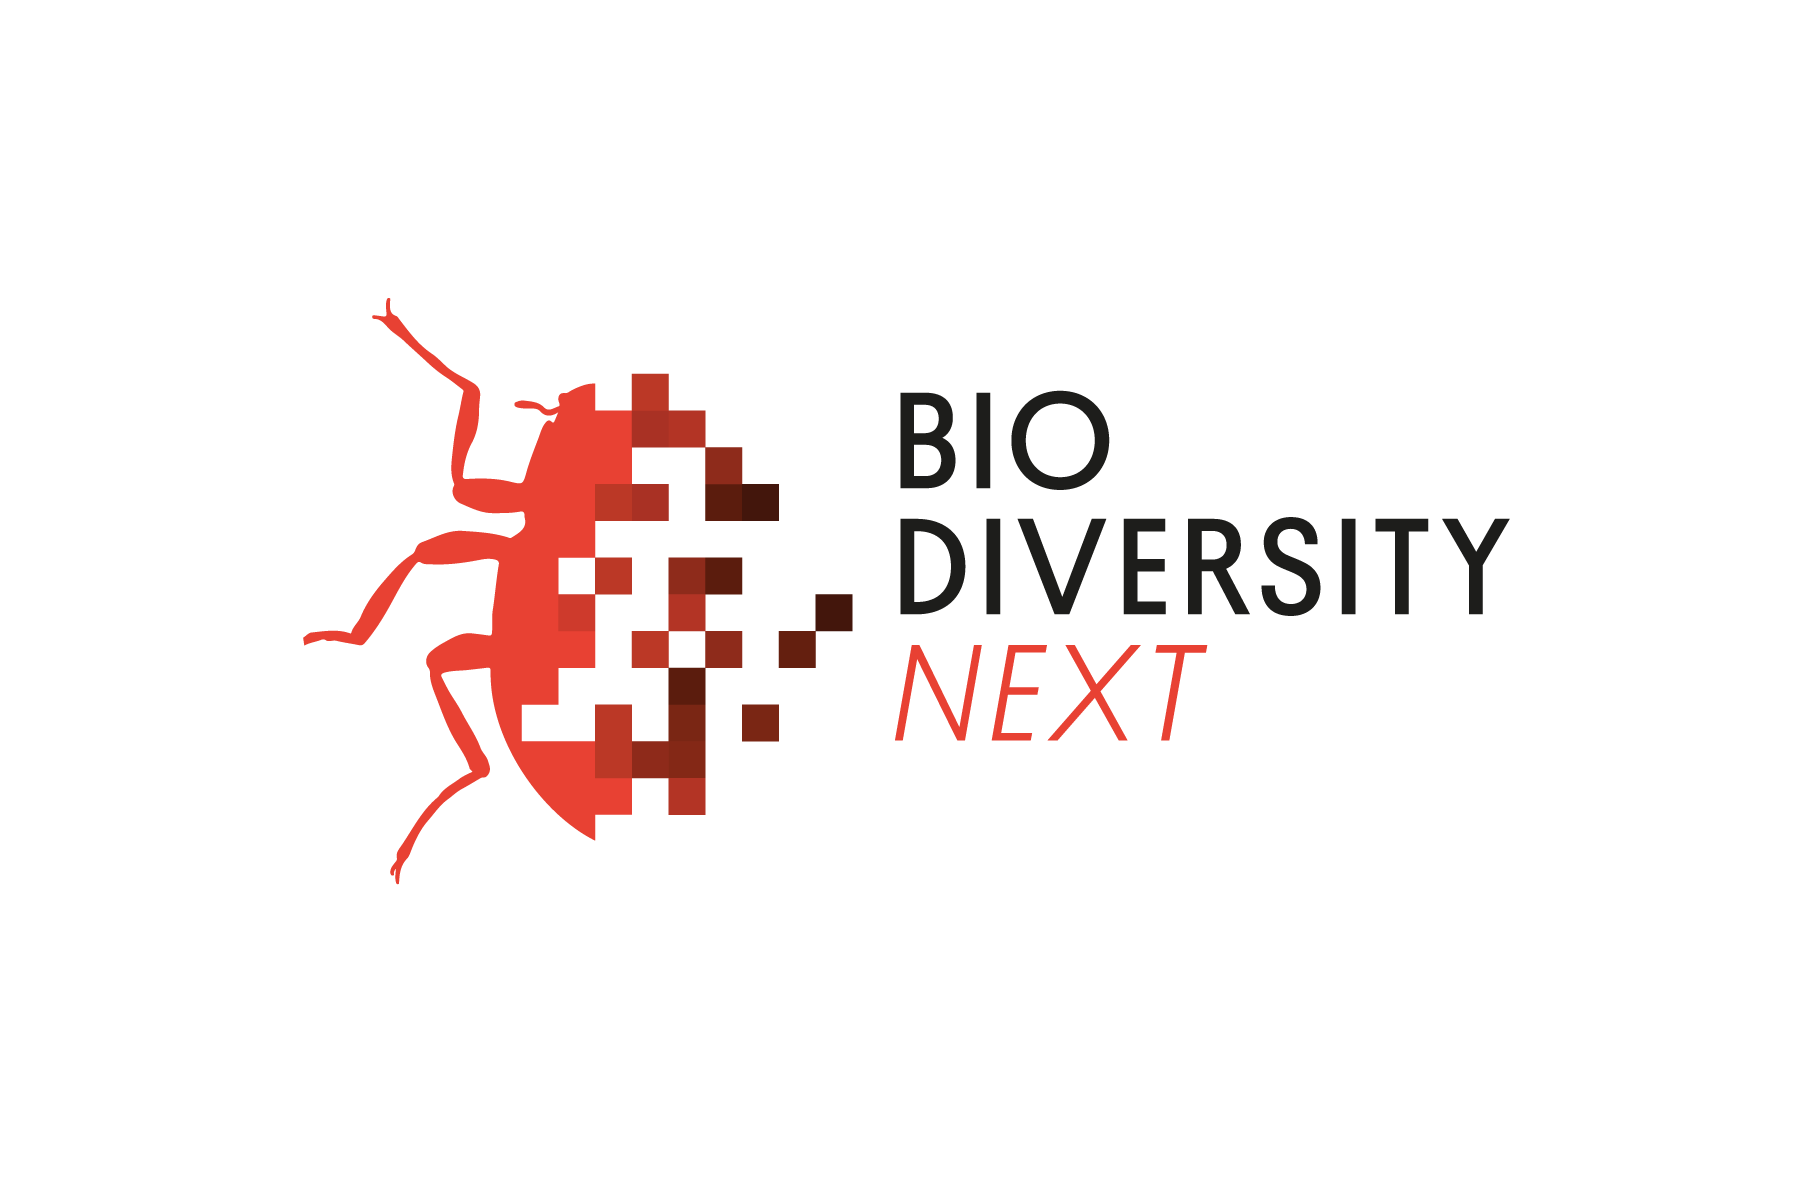 (c) Biodiversitynext.org